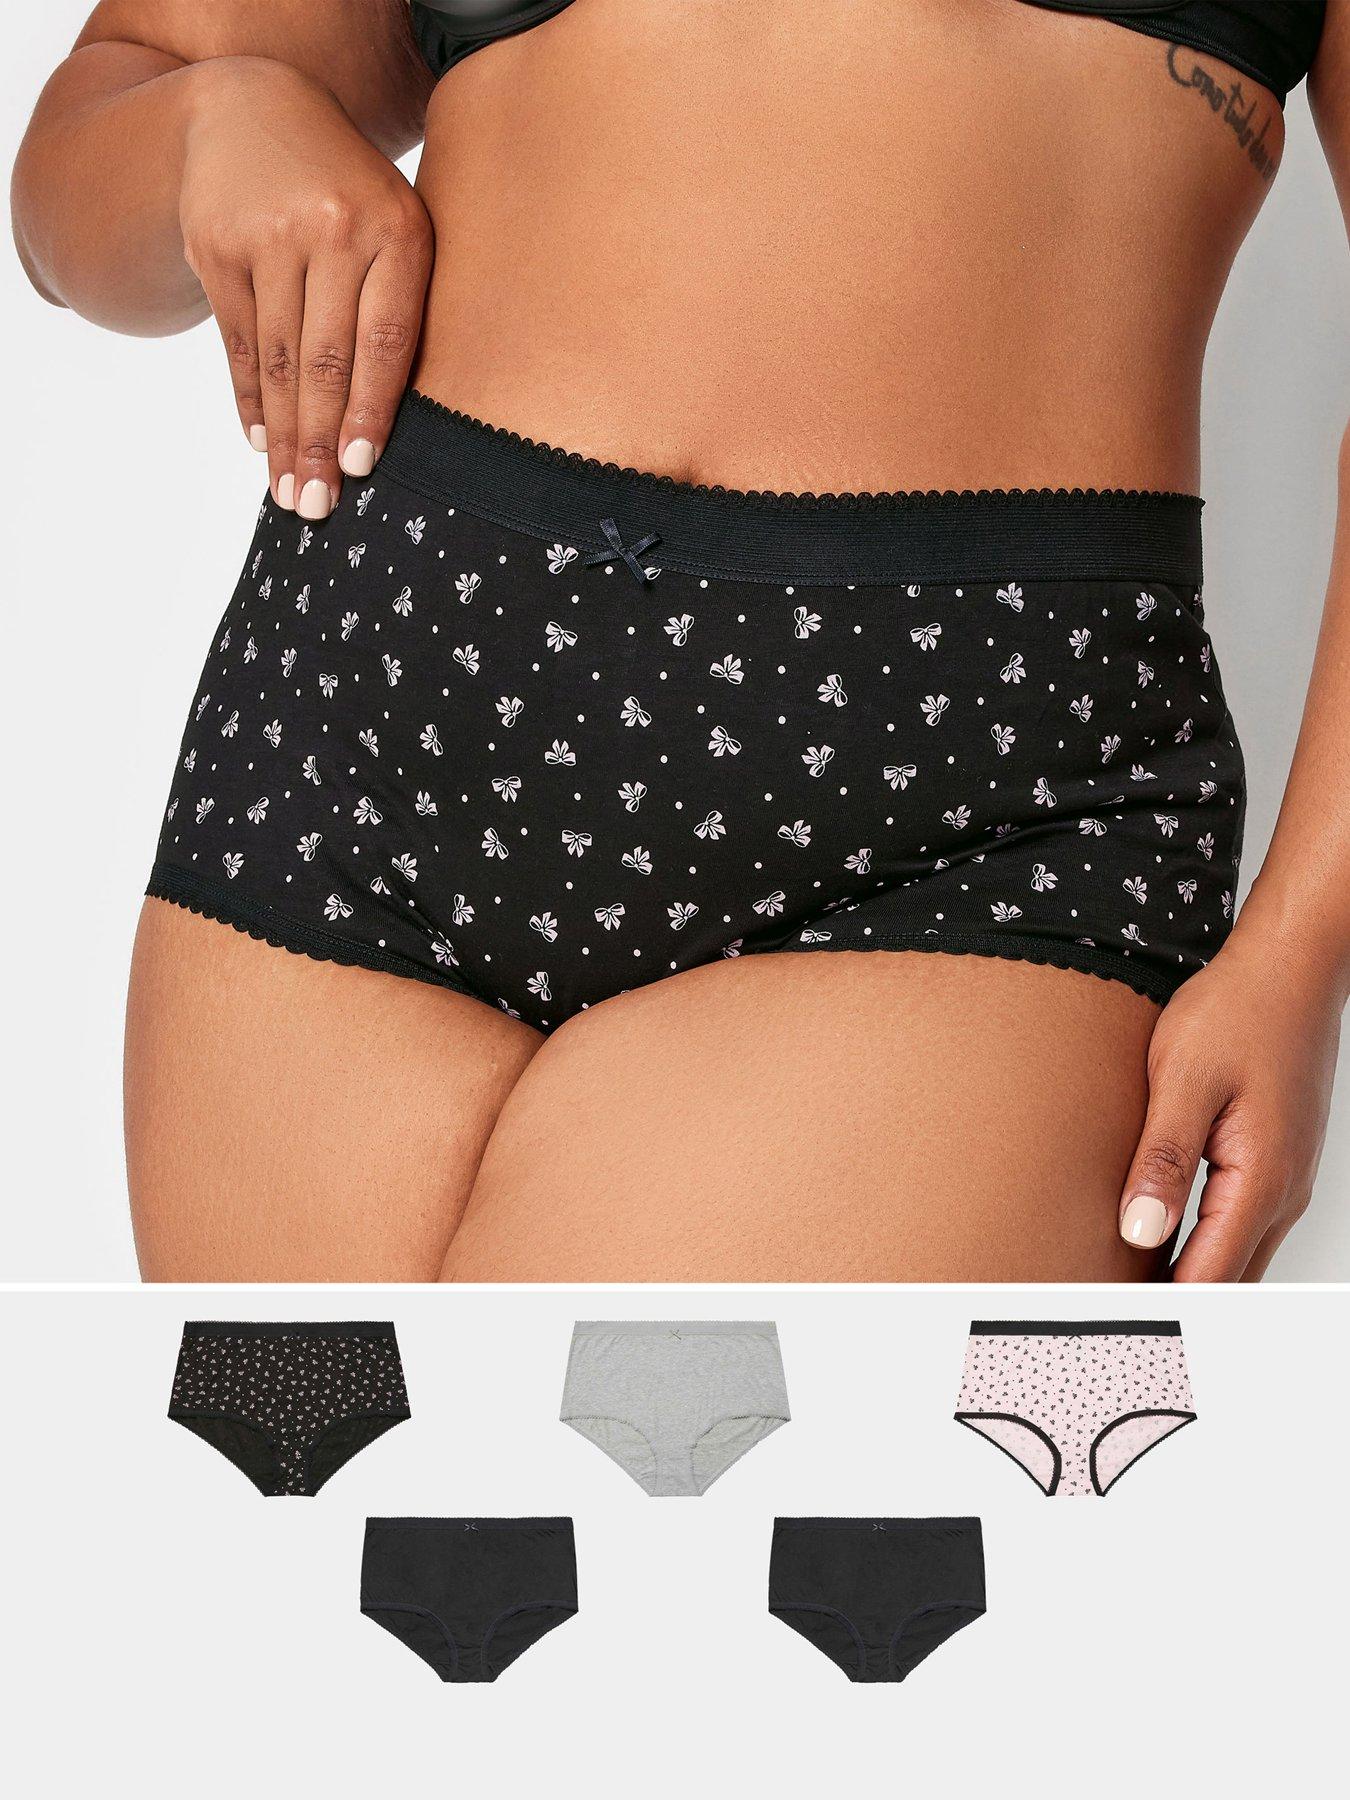 DISOLVE Cotton Panties High-Rise Women Underwear Comfortable Breathable  Lingerie Control Waist Female Briefs Pack of 3 Plus Size (40 Till 44)  Assorted